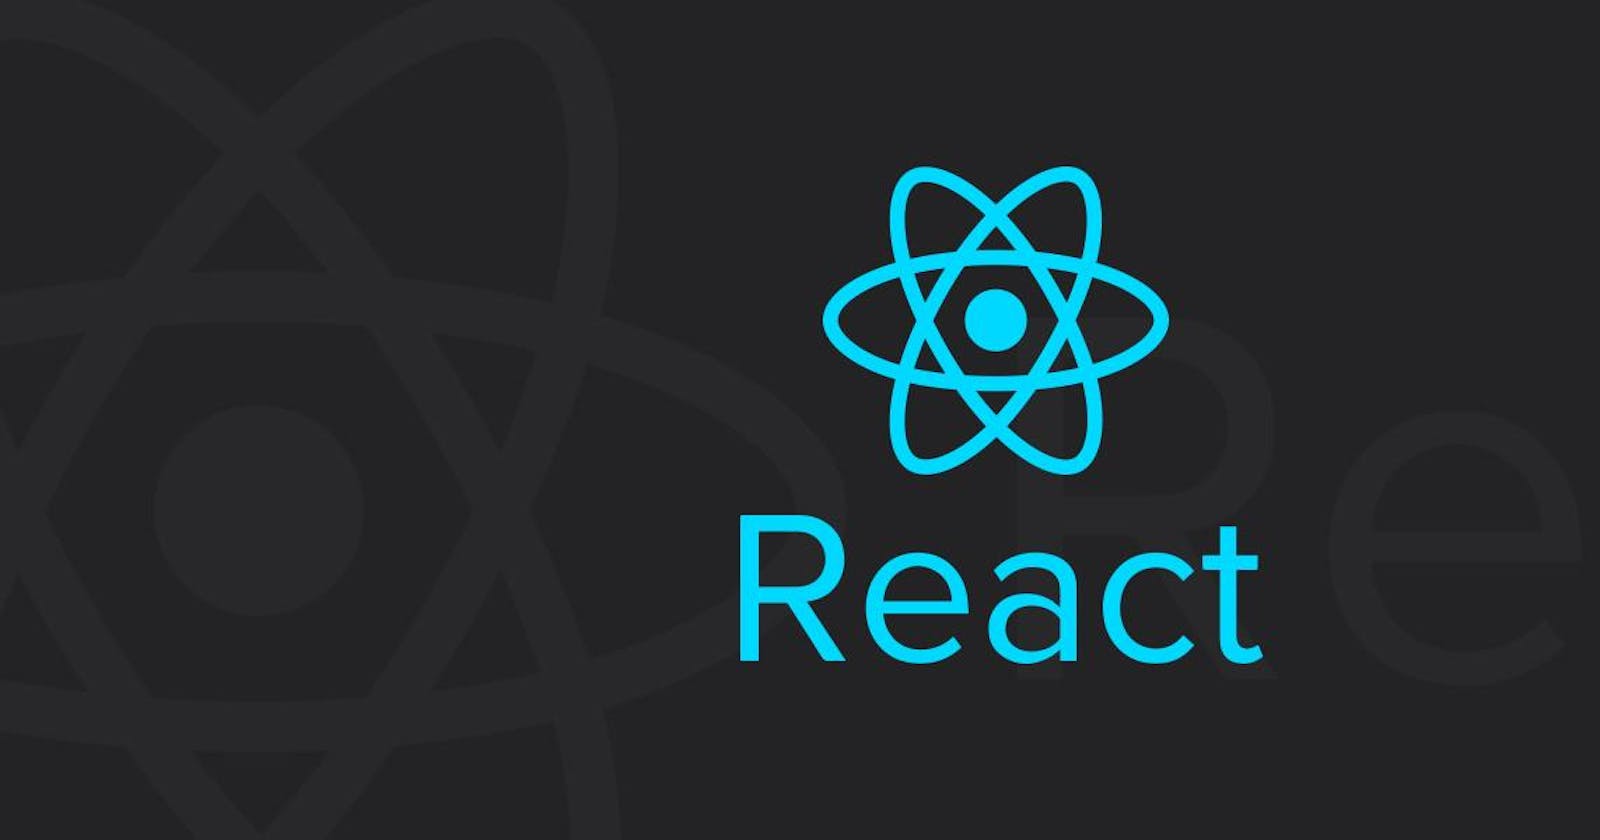 React: The frontend framework